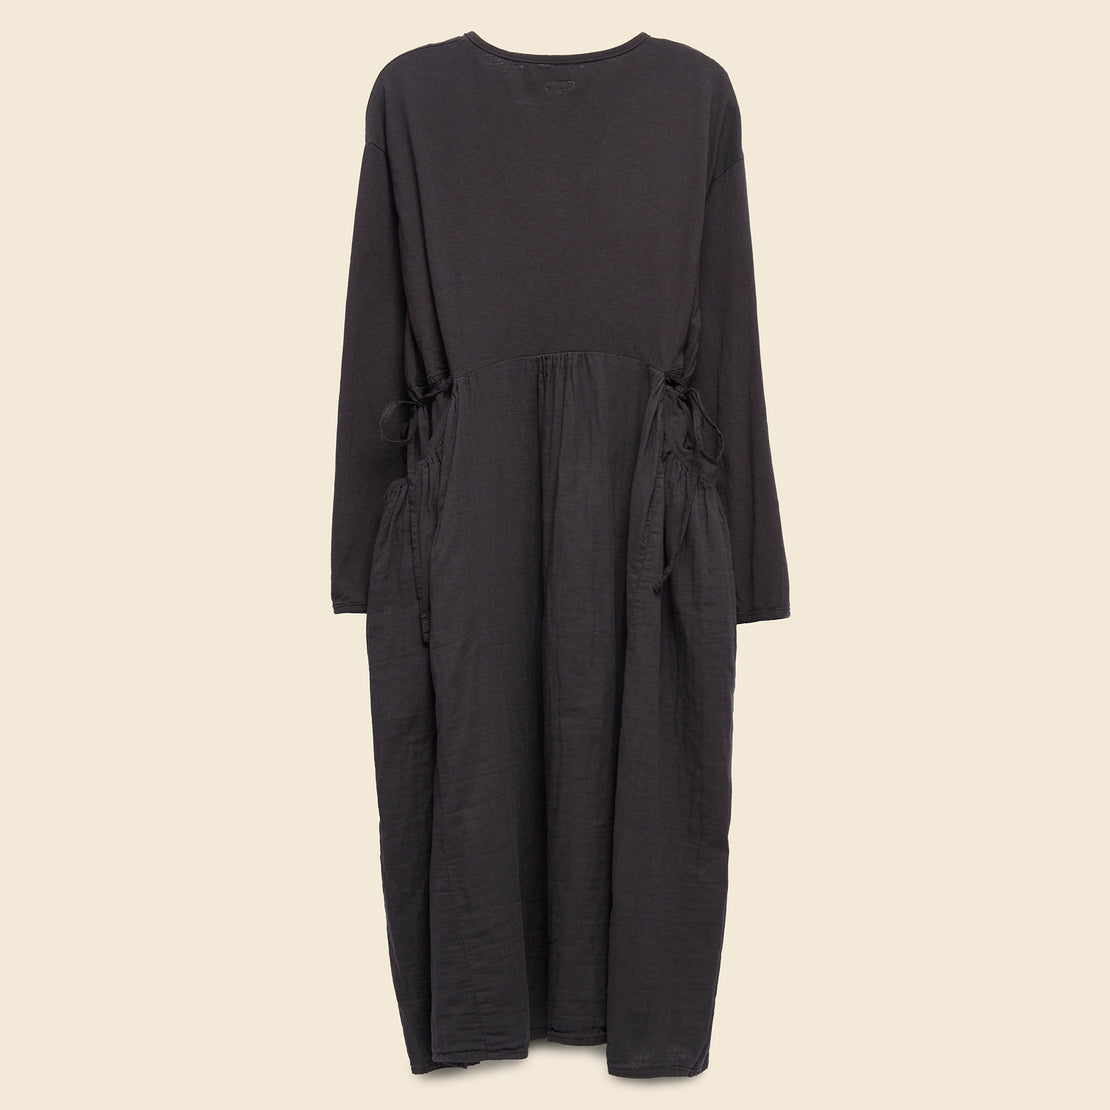 Jersey x Double Gauze Butter Dress - Black - Kapital - STAG Provisions - W - Onepiece - Dress